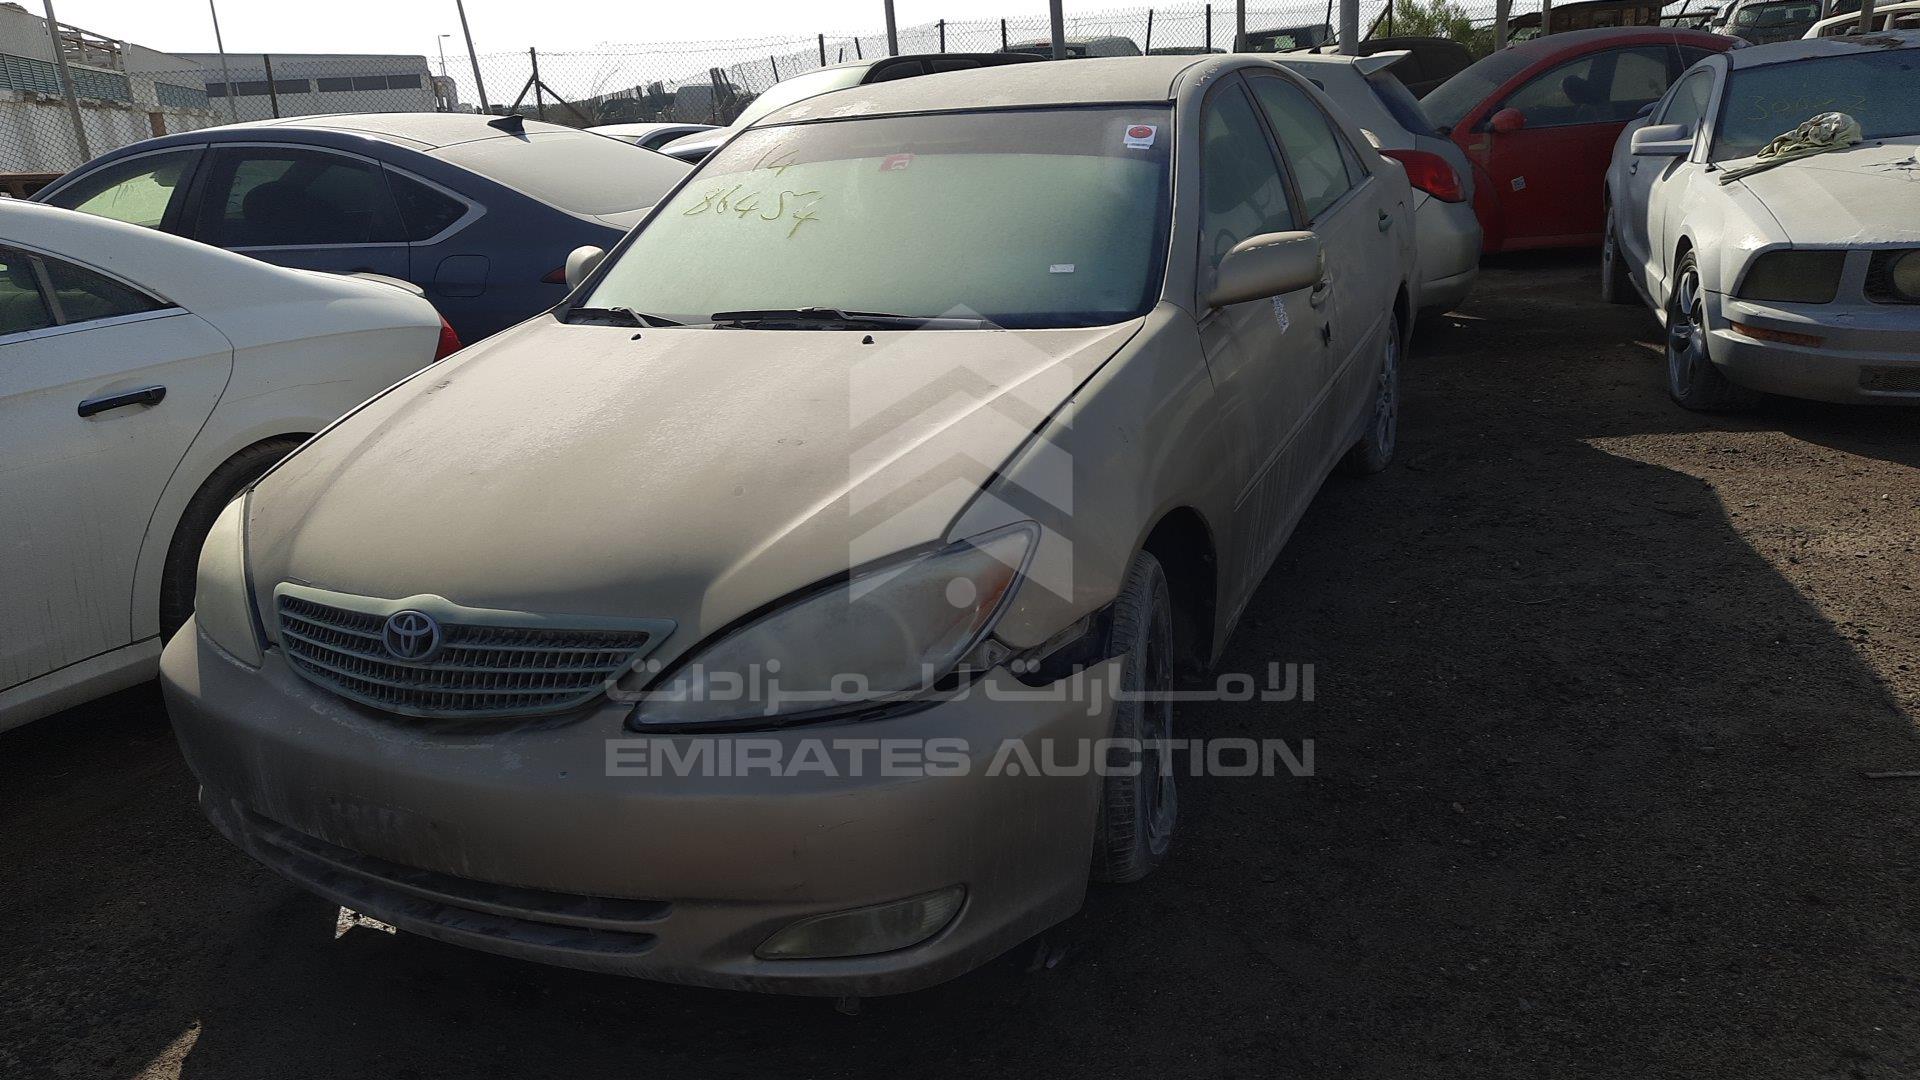 image 2 5 - Camry Auction 2000 to 2015_ price 5000 dirhams